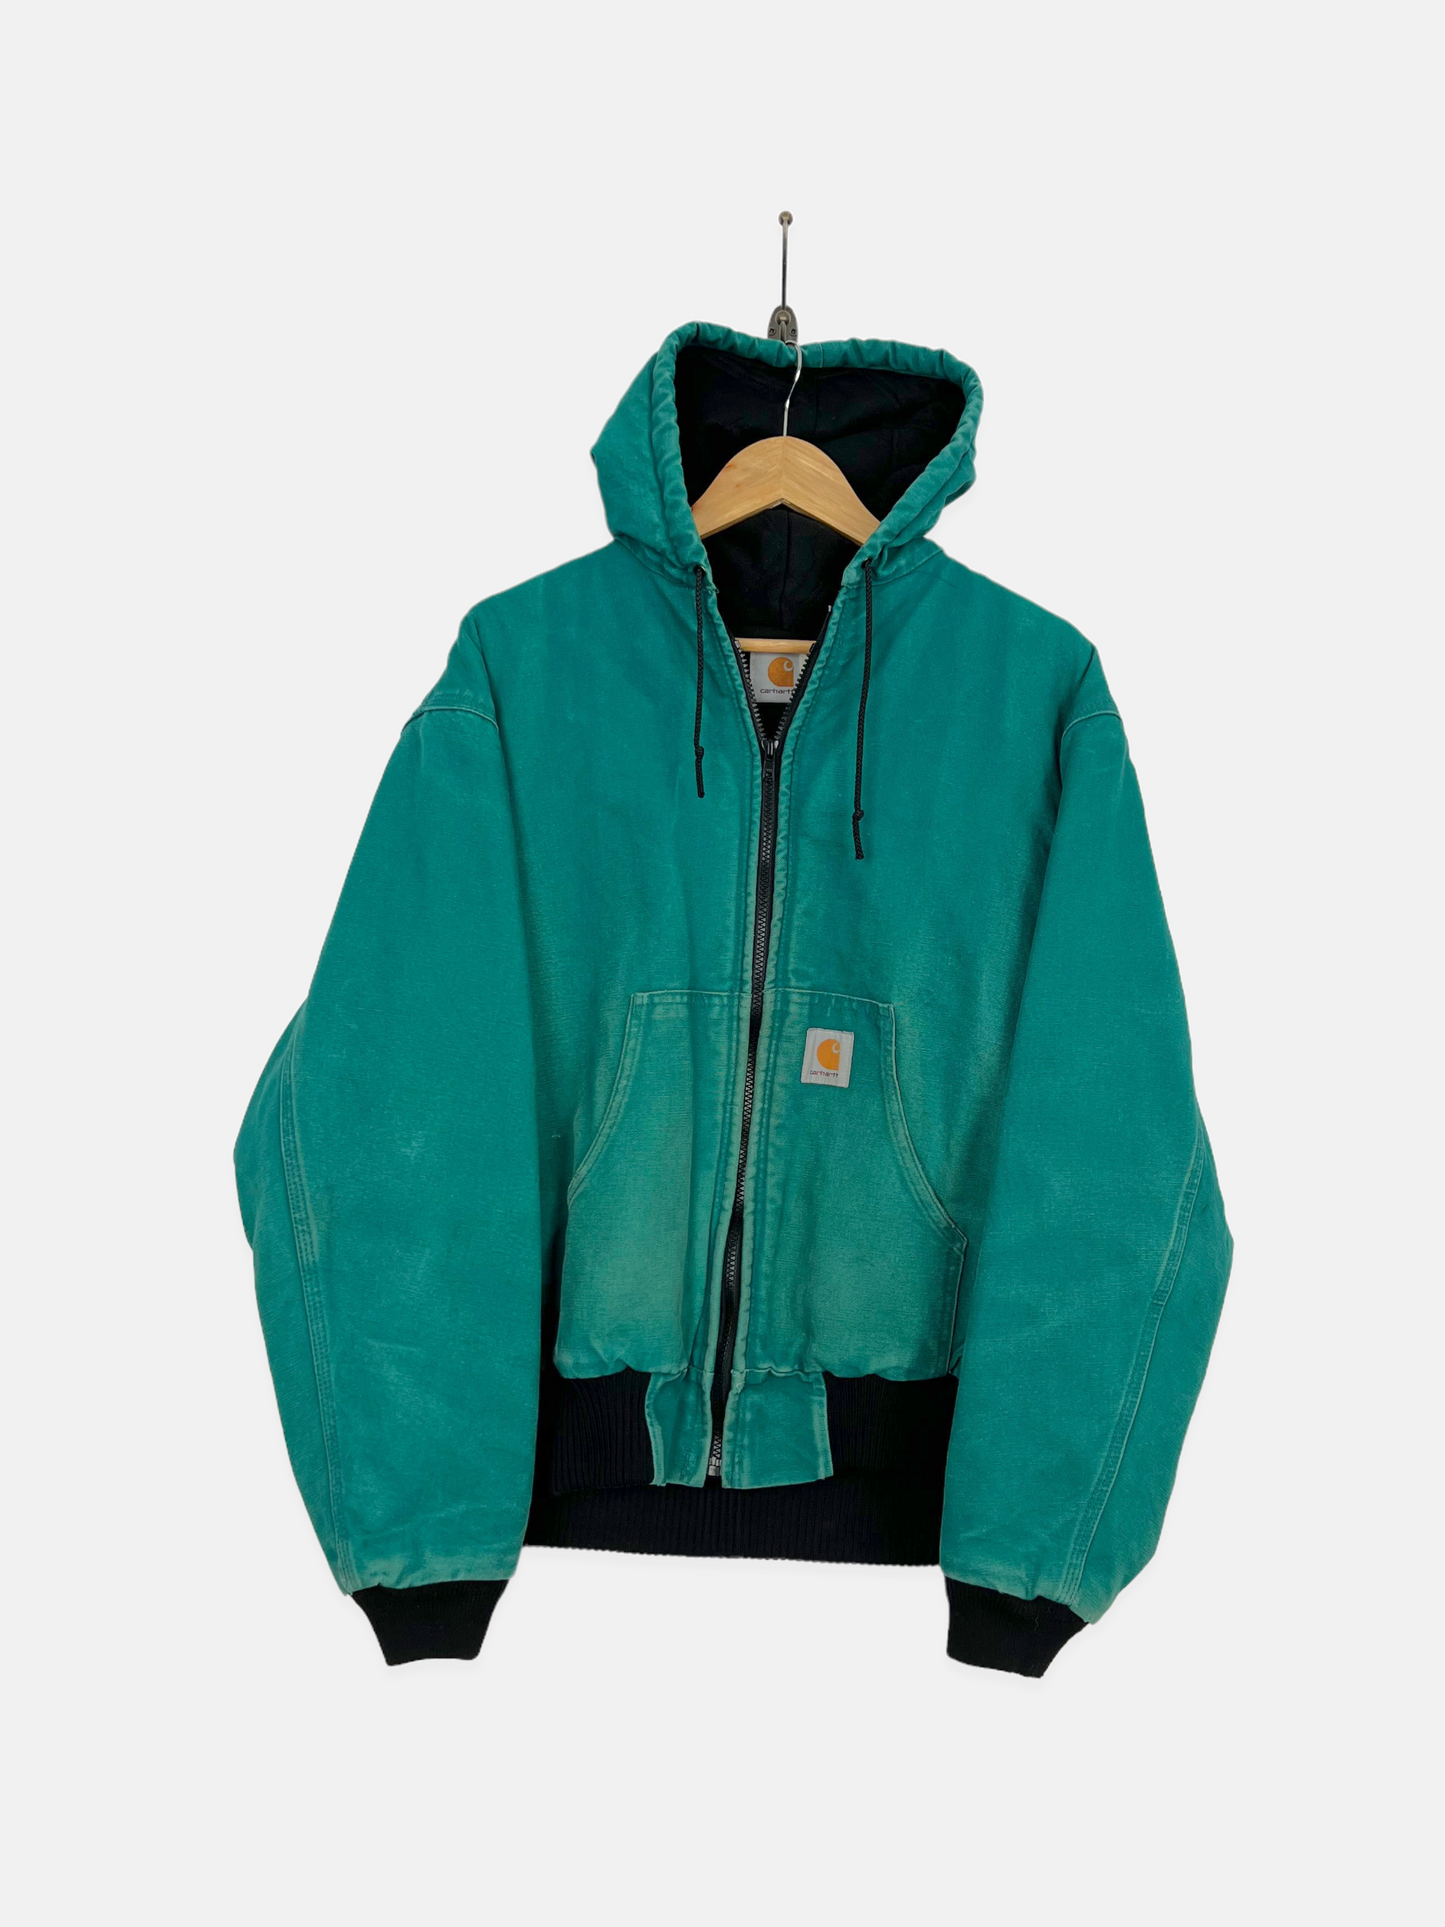 90's Carhartt Heavy Duty Vintage Jacket with Hood Size M